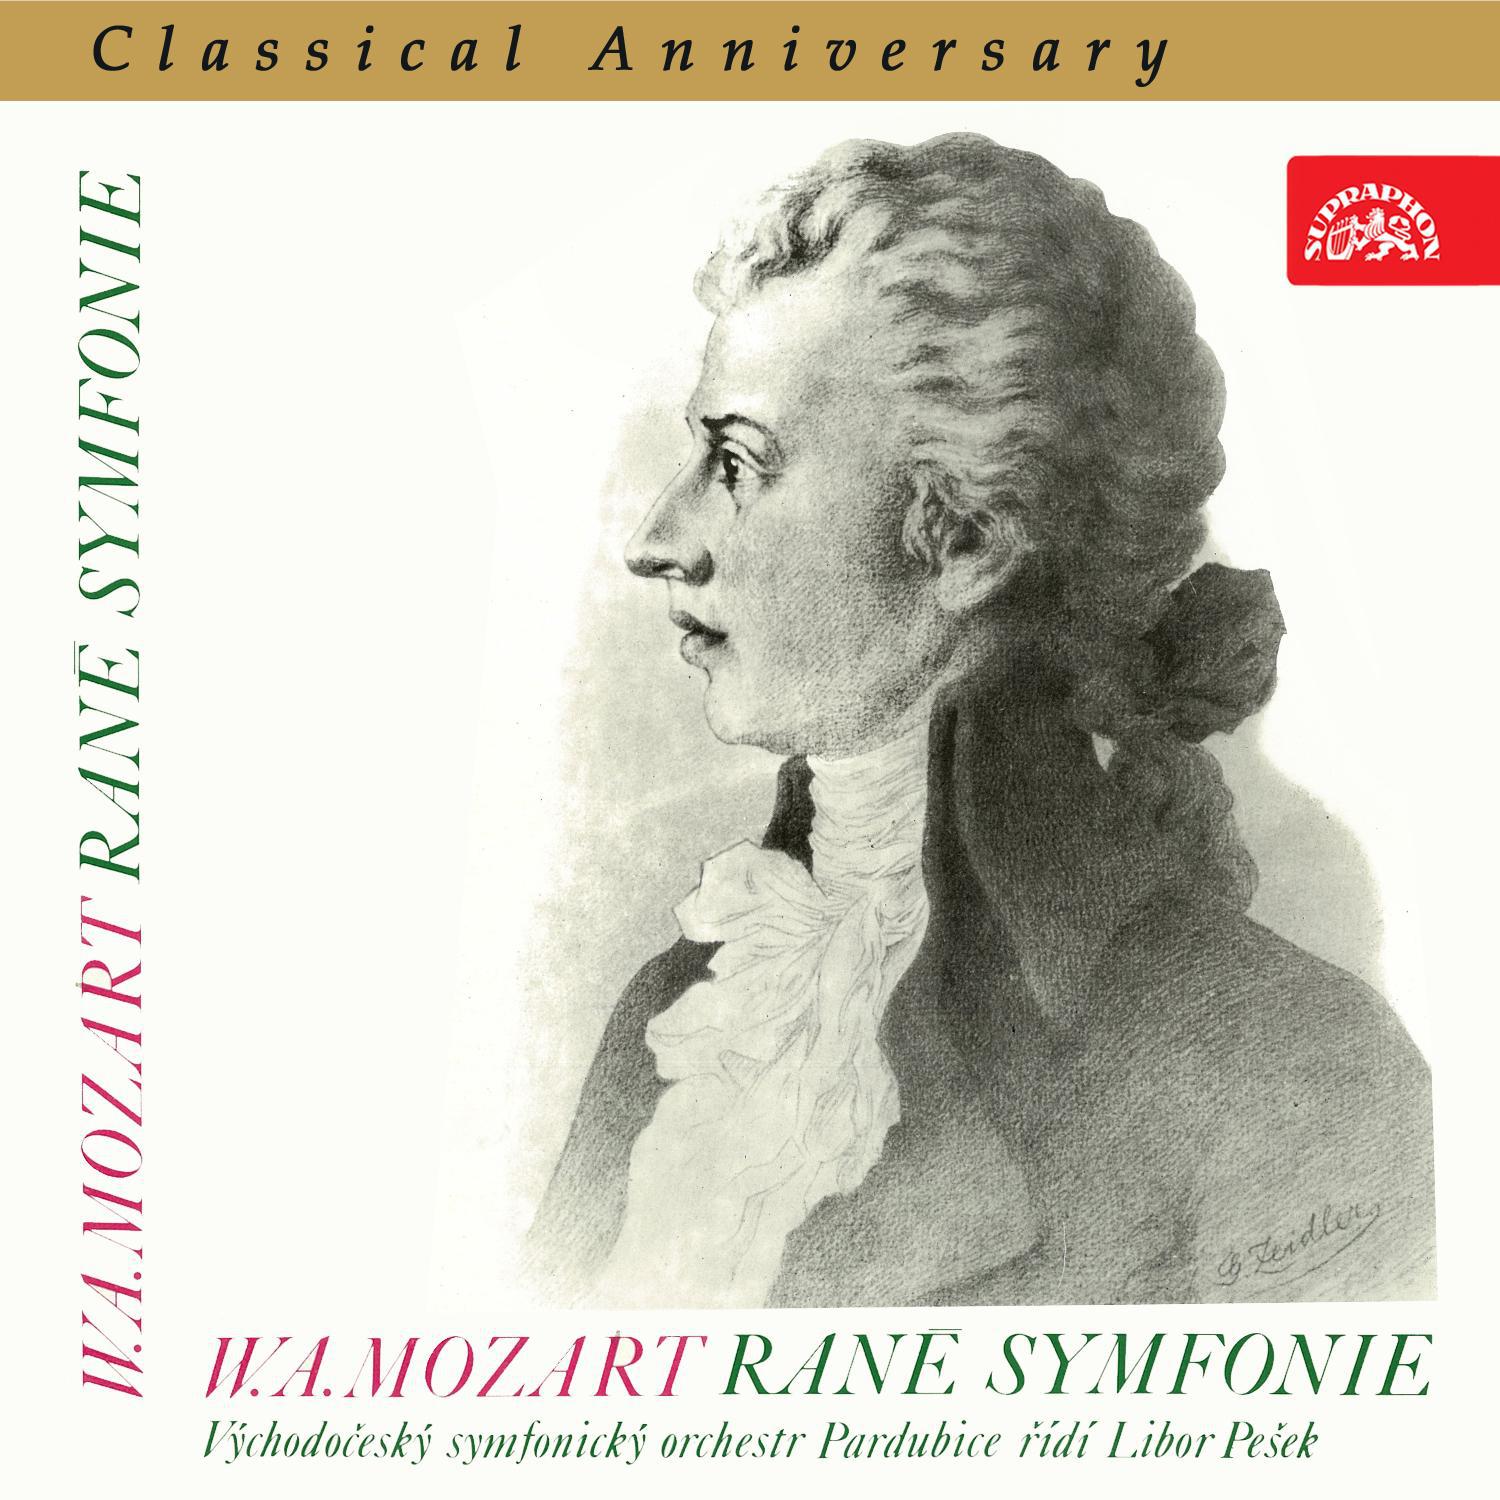 Classical Anniversary Libor Pe ek  Mozart: Symphonies